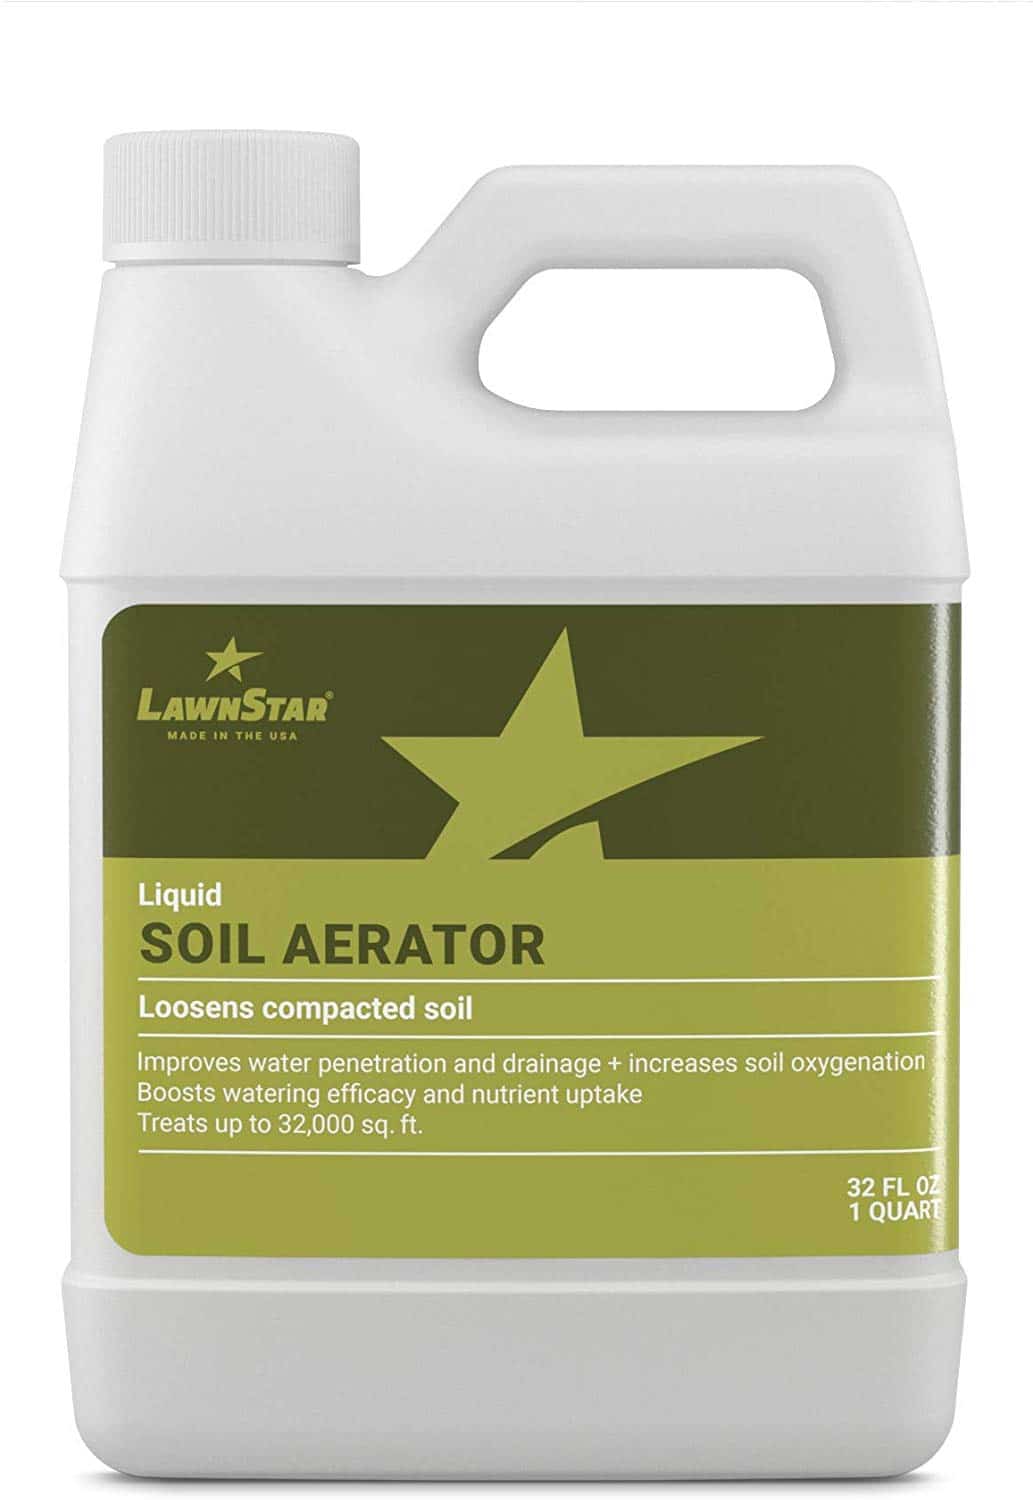 LawnStar Liquid Soil Aerator